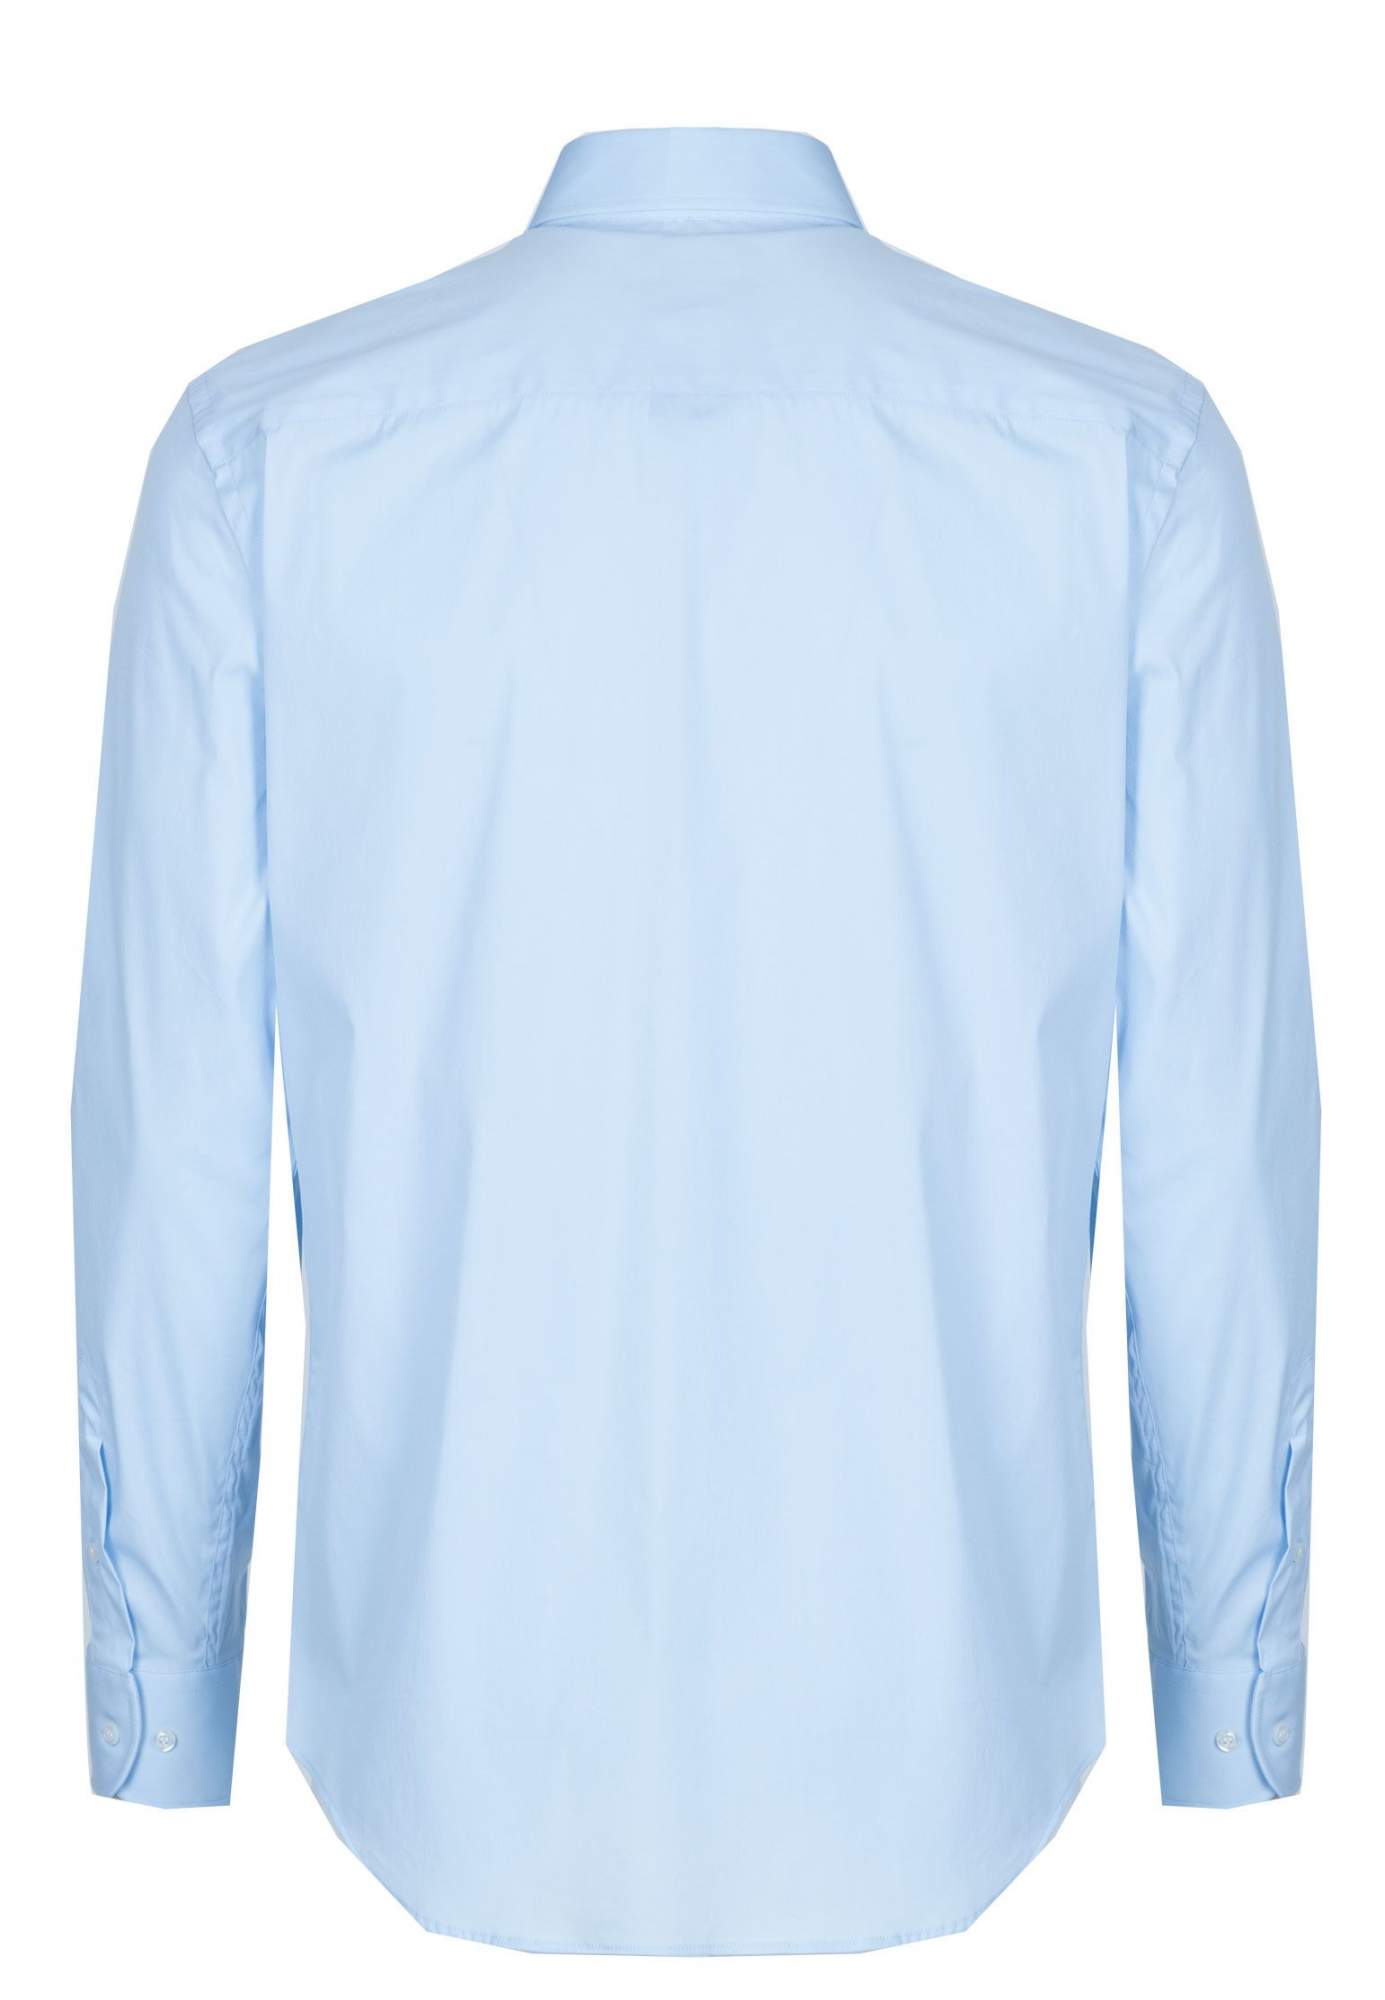 Рубашка мужская Emporio Armani 99158 голубая 39